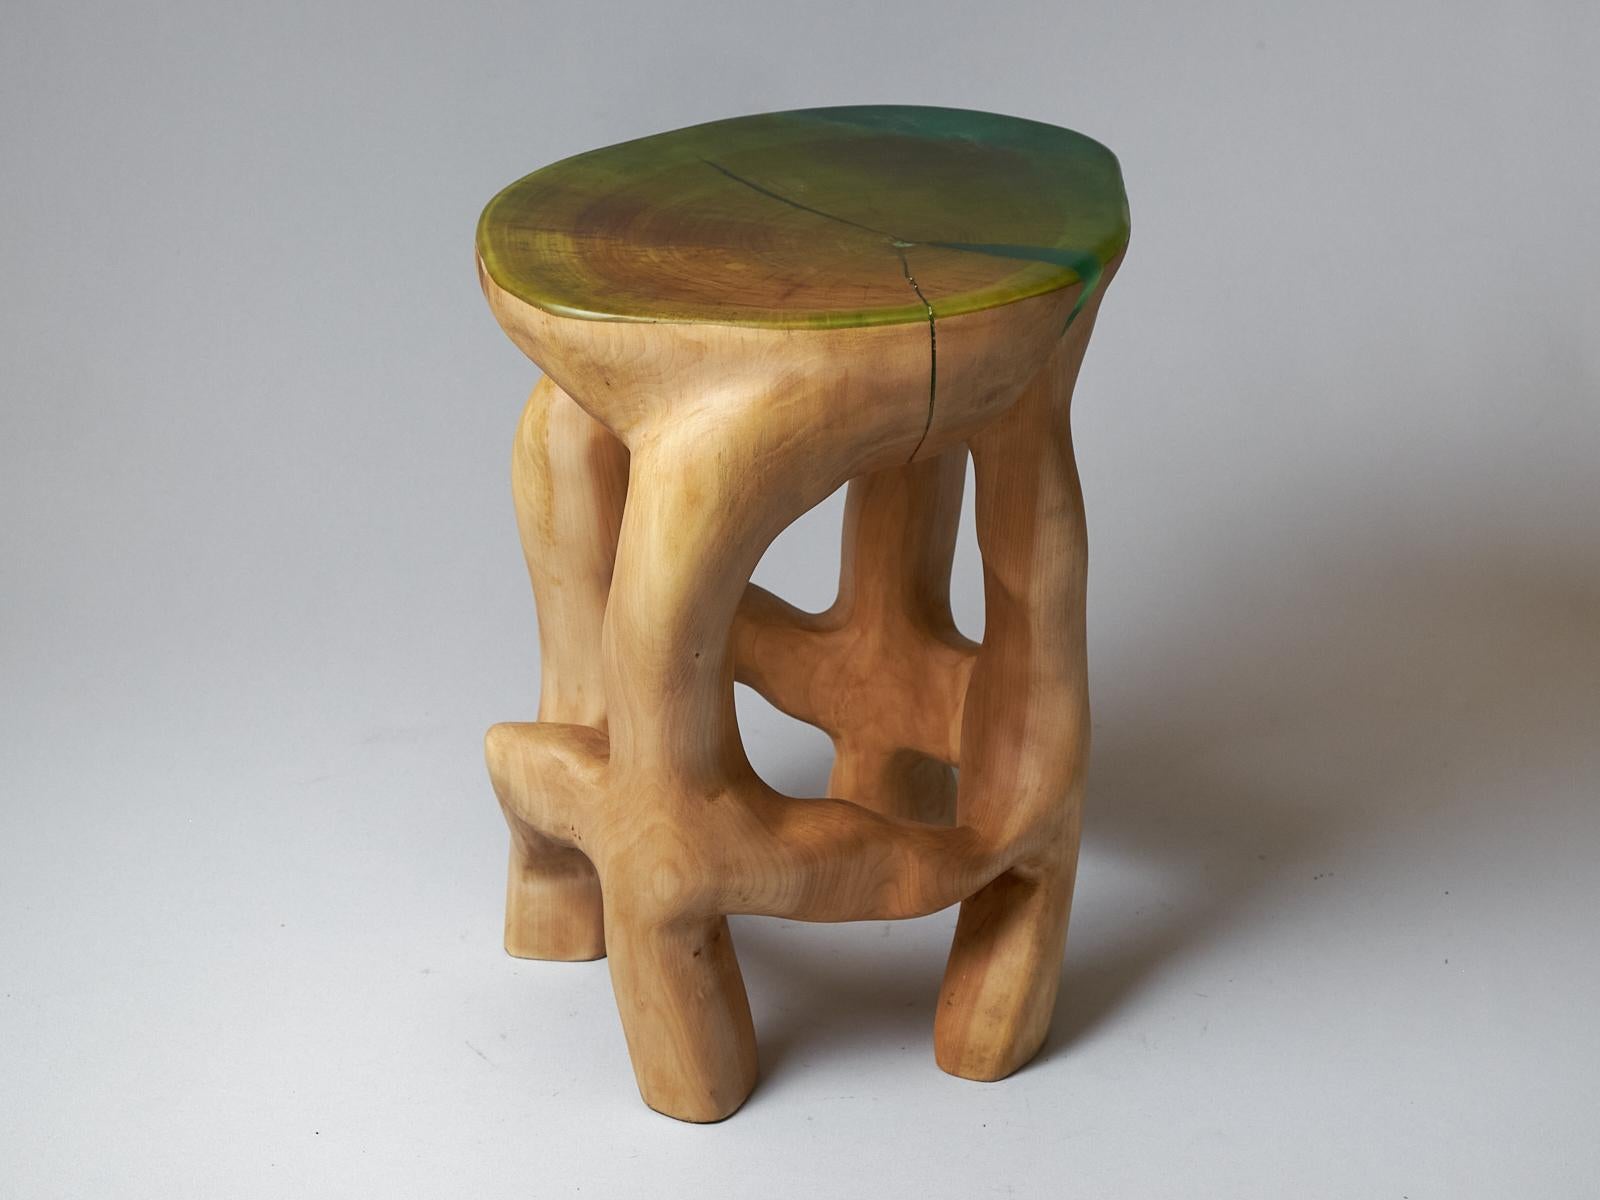 Carved Satyrs, Solid Wood Sculptural Side, Table Original Contemporary Design, Lognitur For Sale